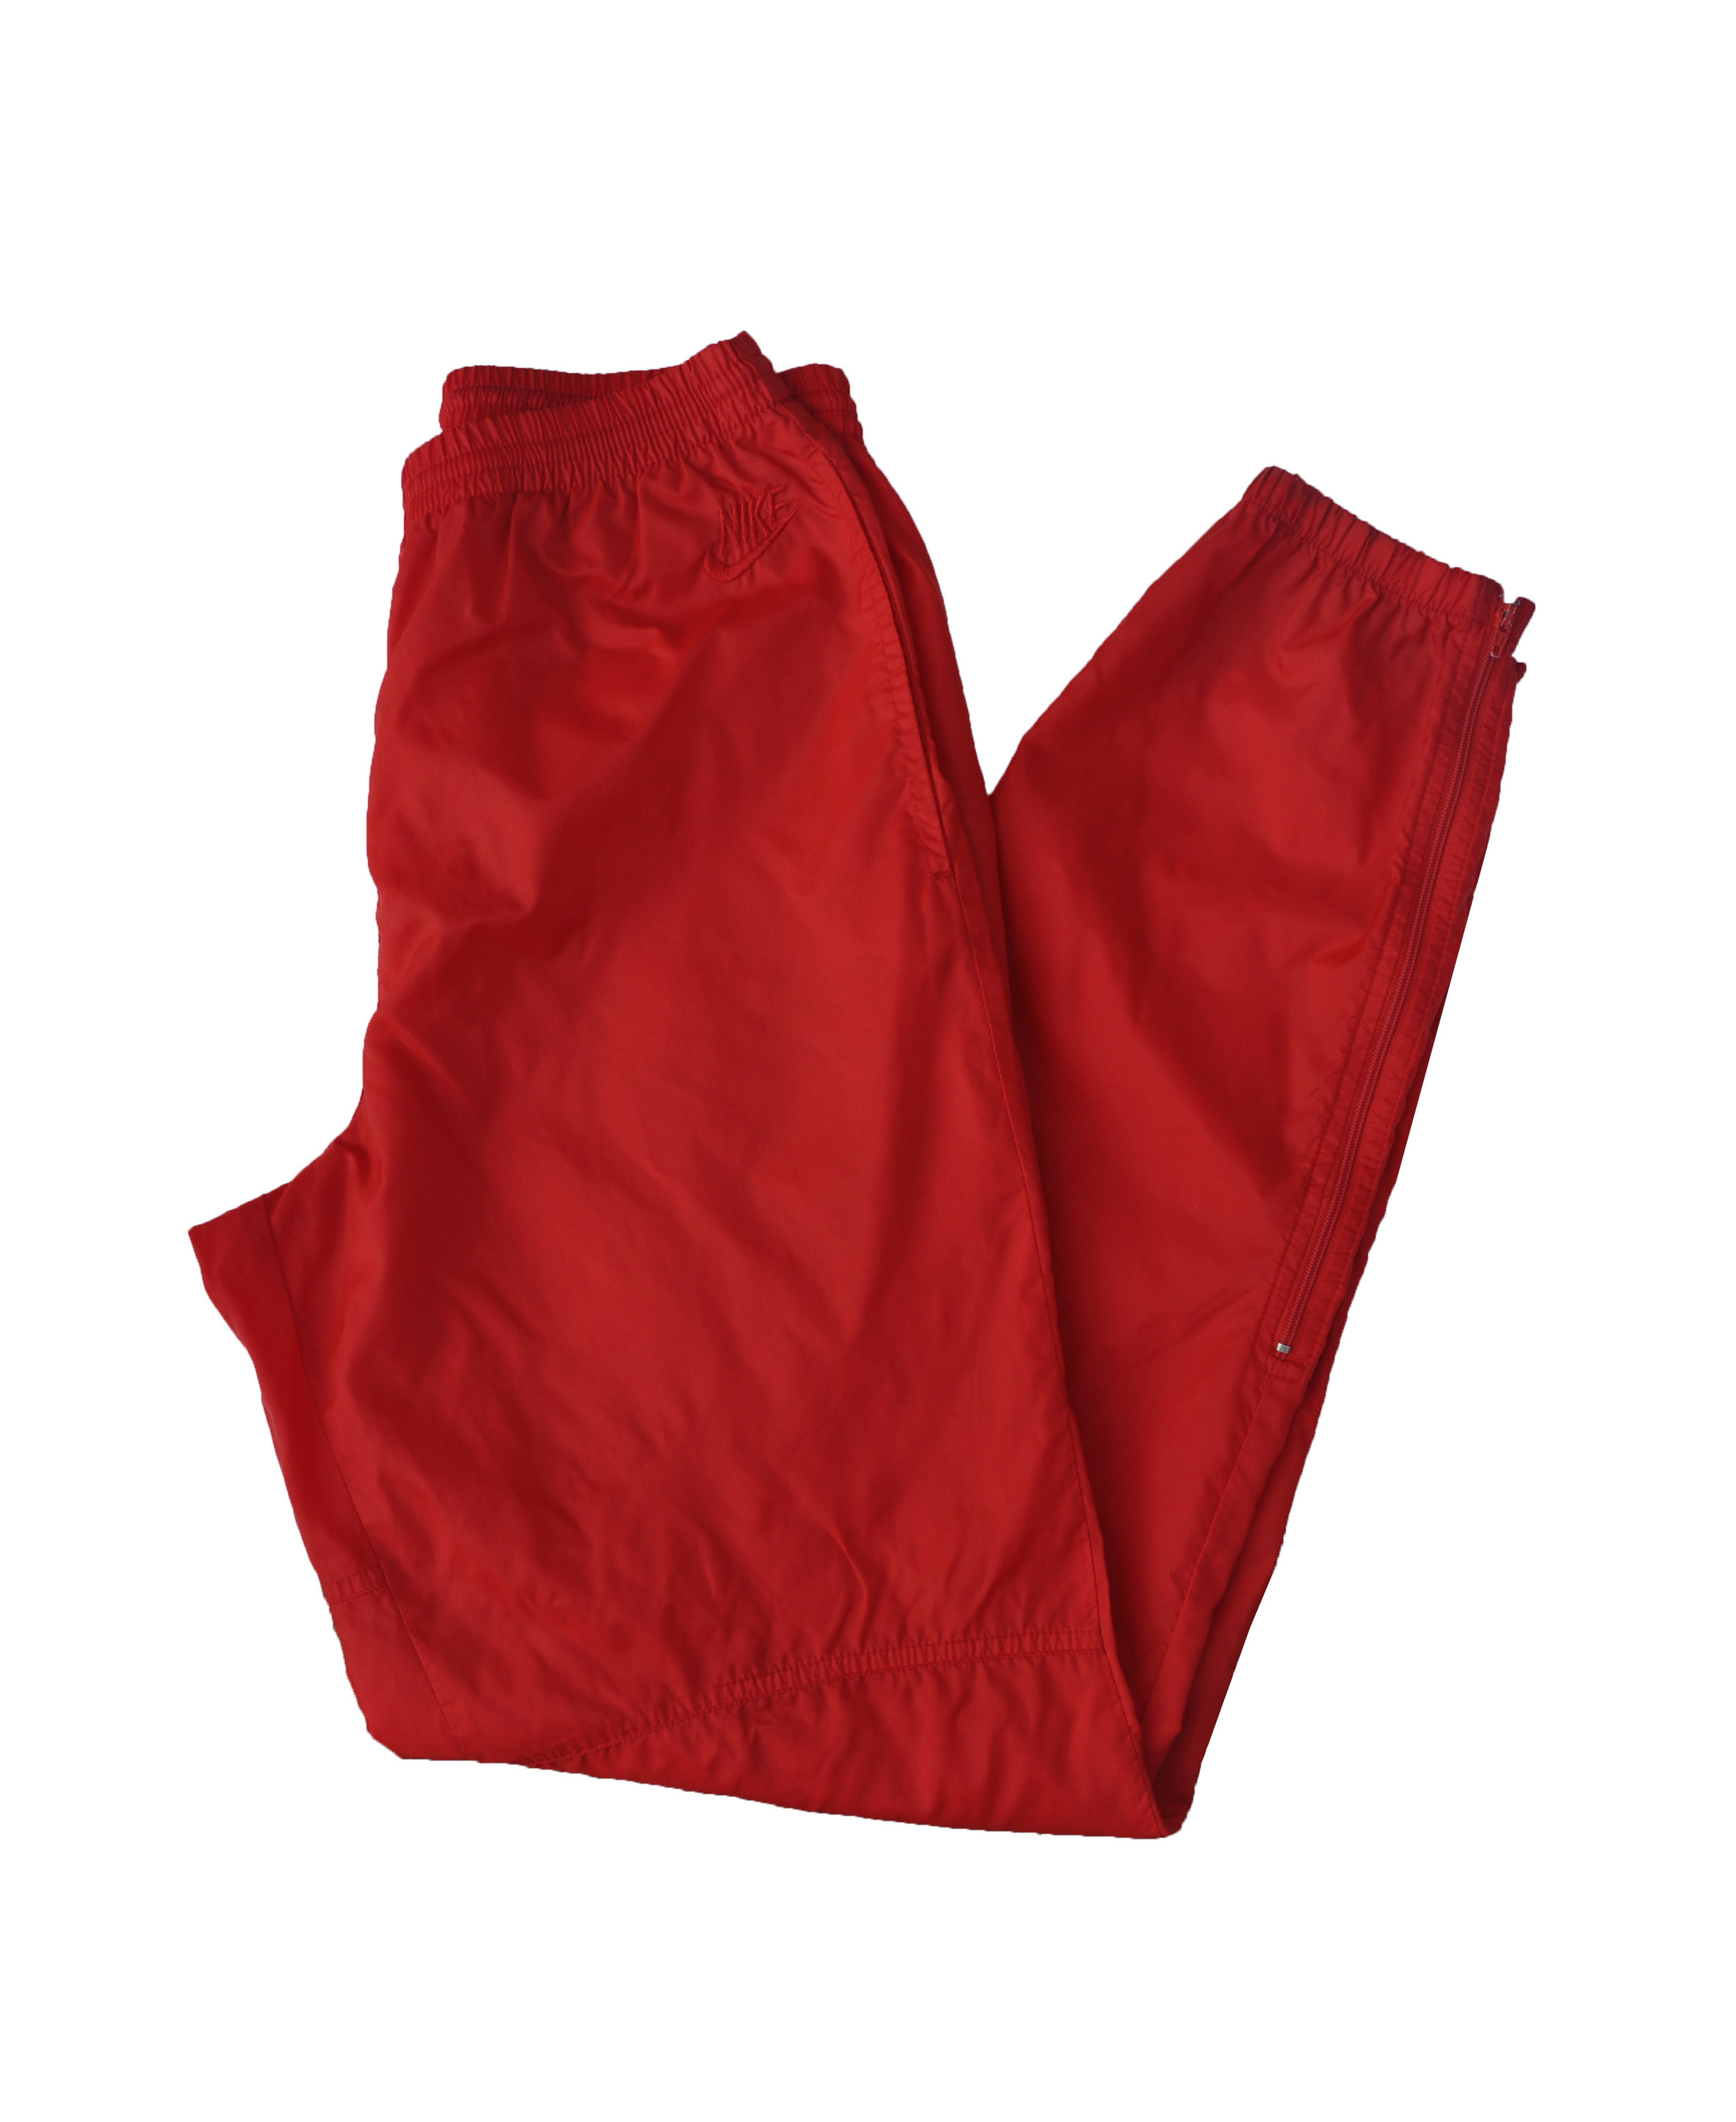 red nike windbreaker pants